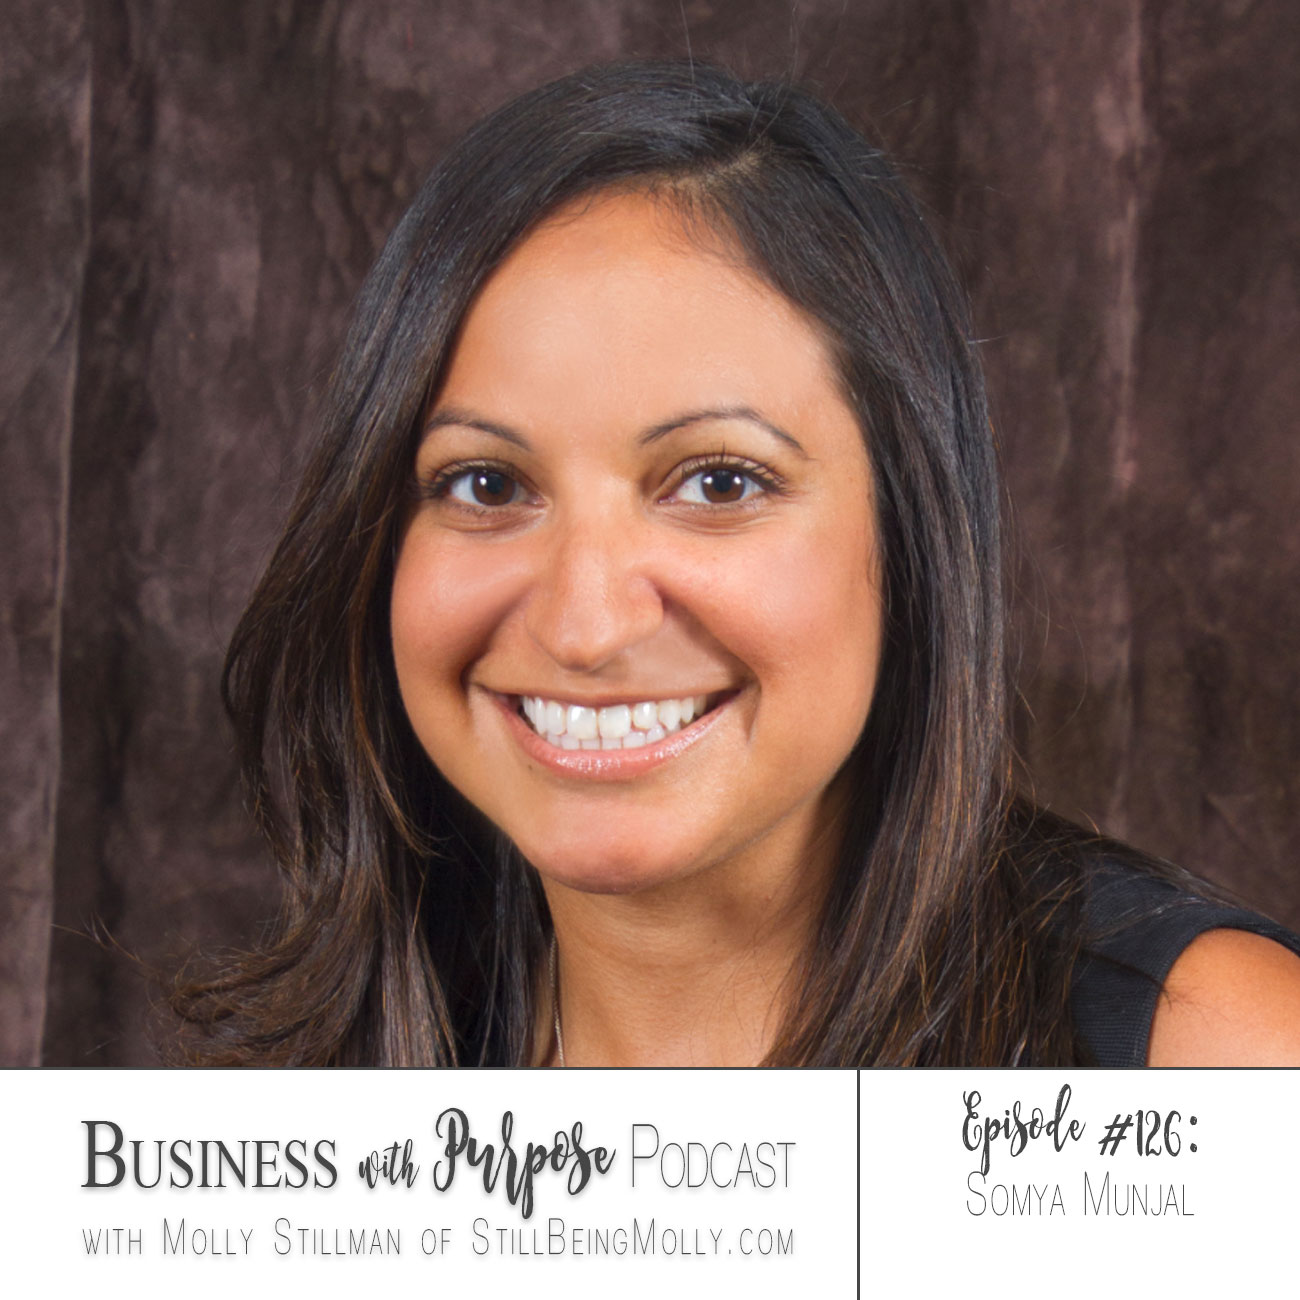 Business with Purpose Podcast EP 126: Somya Munjal